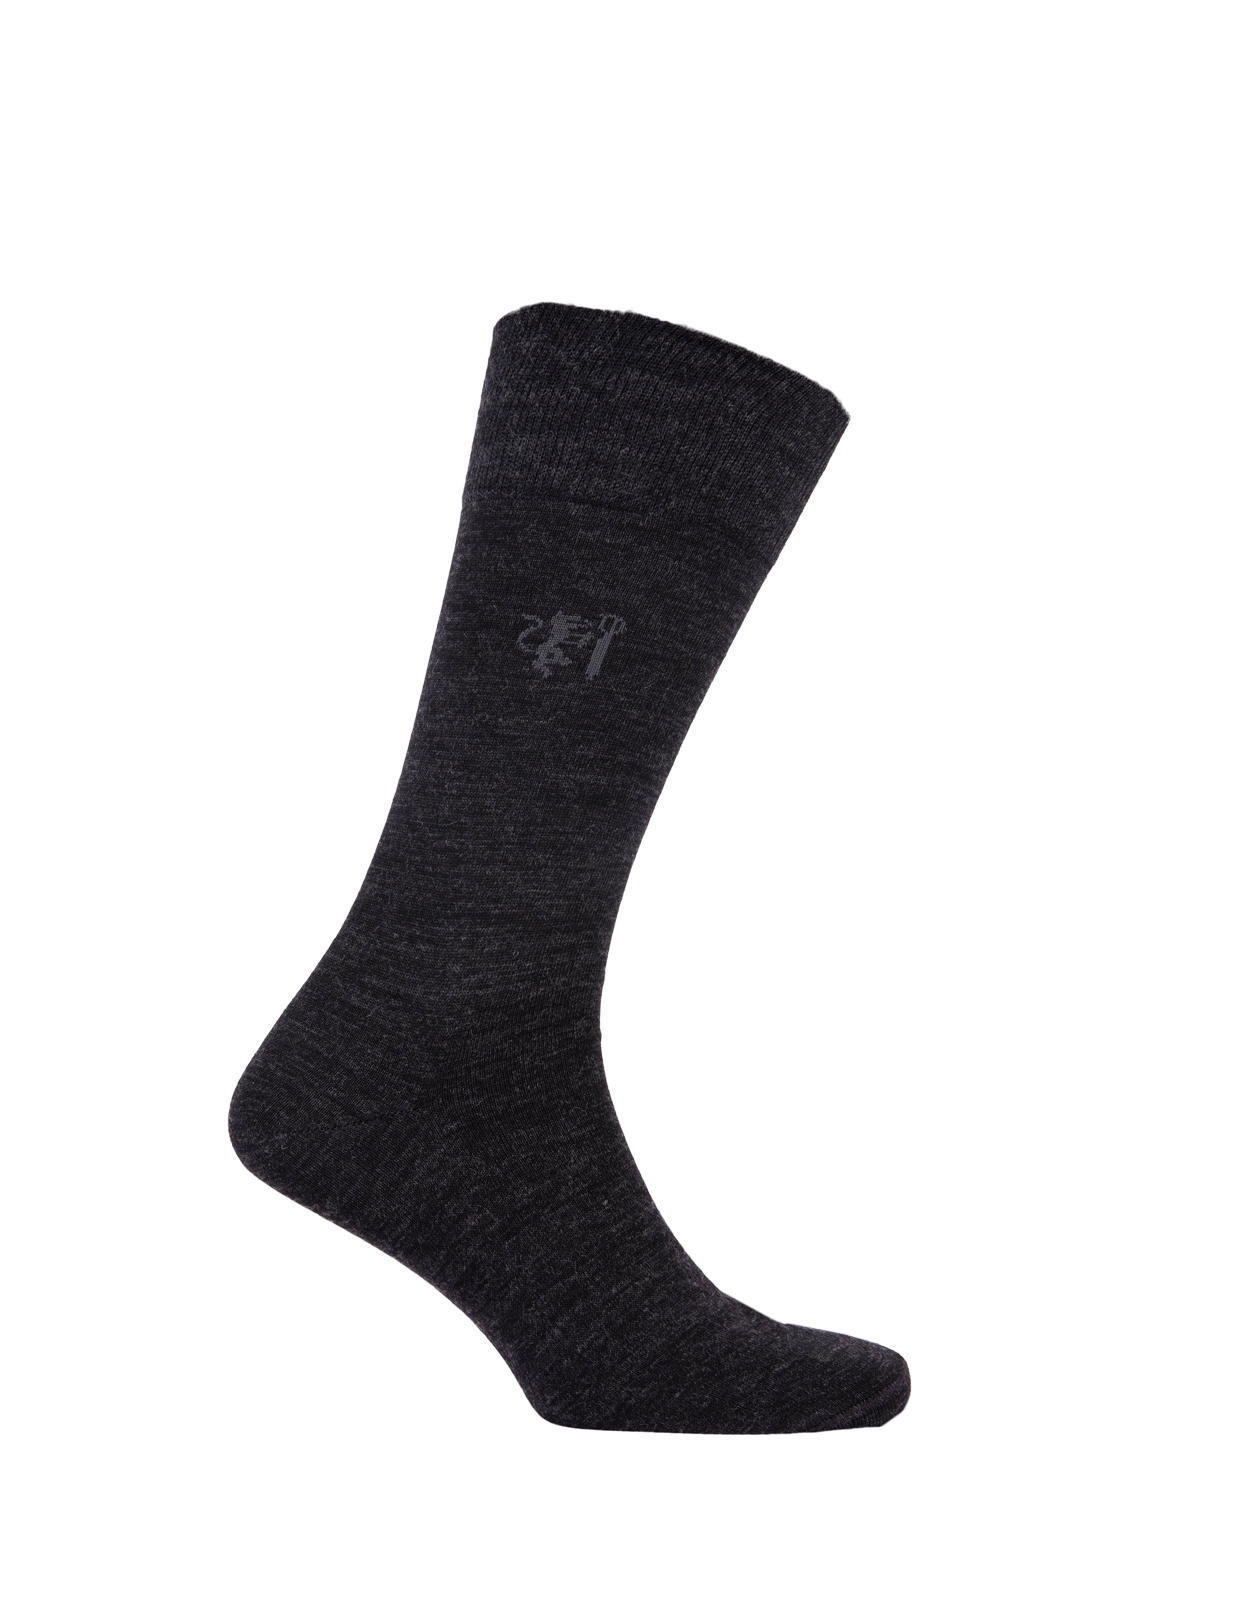 Socks Wool Blend Antracite Stl 40-43